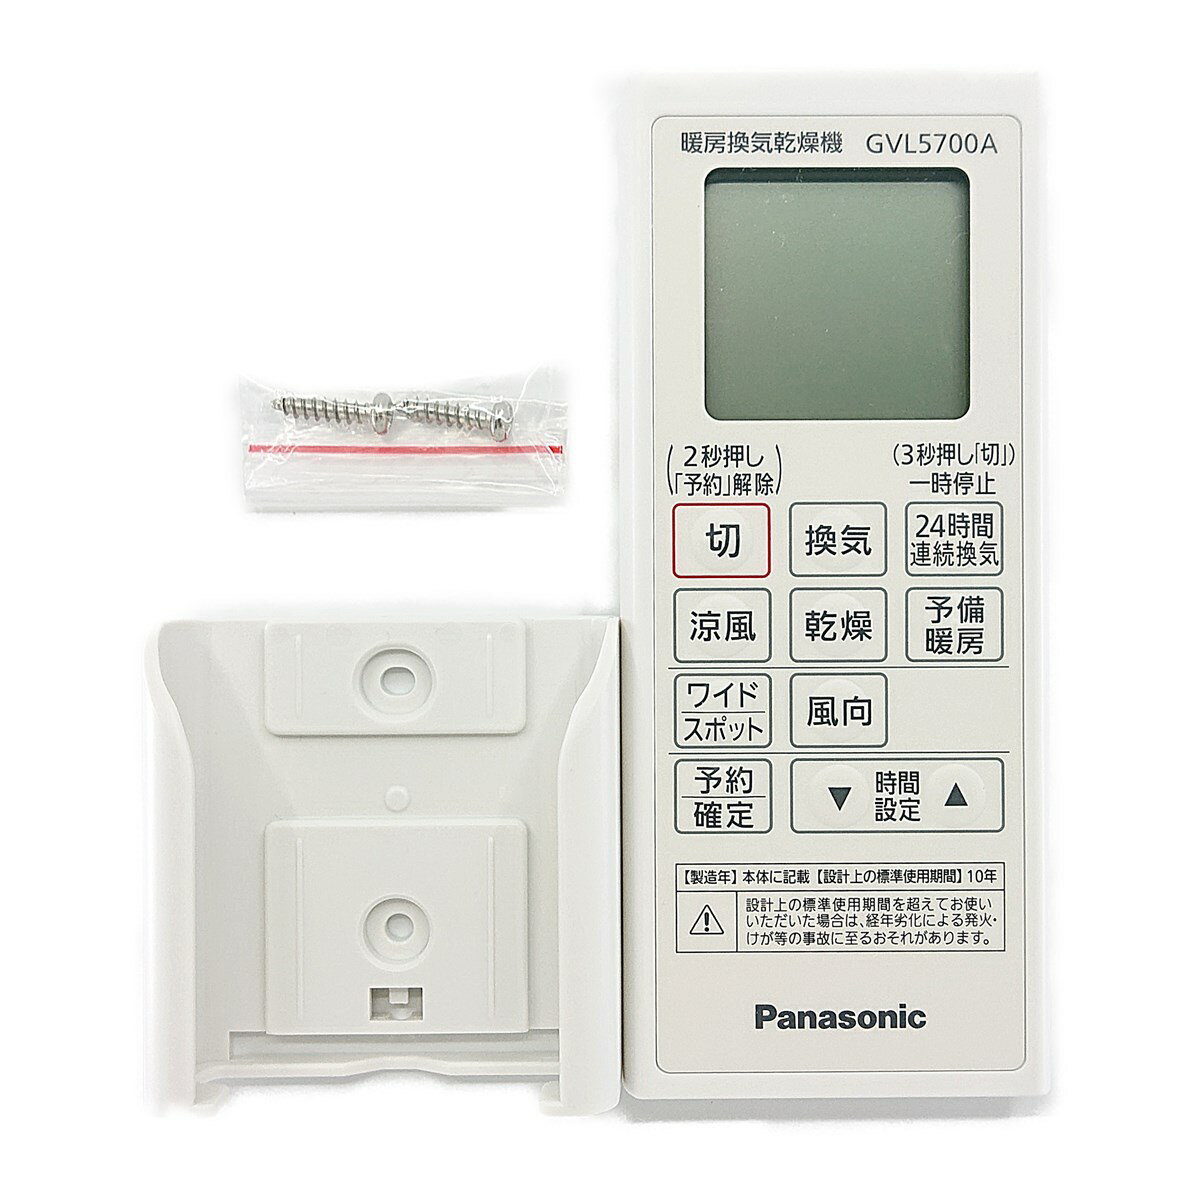 FFV1310632 パナソニック バスルーム 浴室 暖房換気乾燥機用 リモコン スイッチ GVL5700A対応 新品 純正 交換用 部品 Panasonic